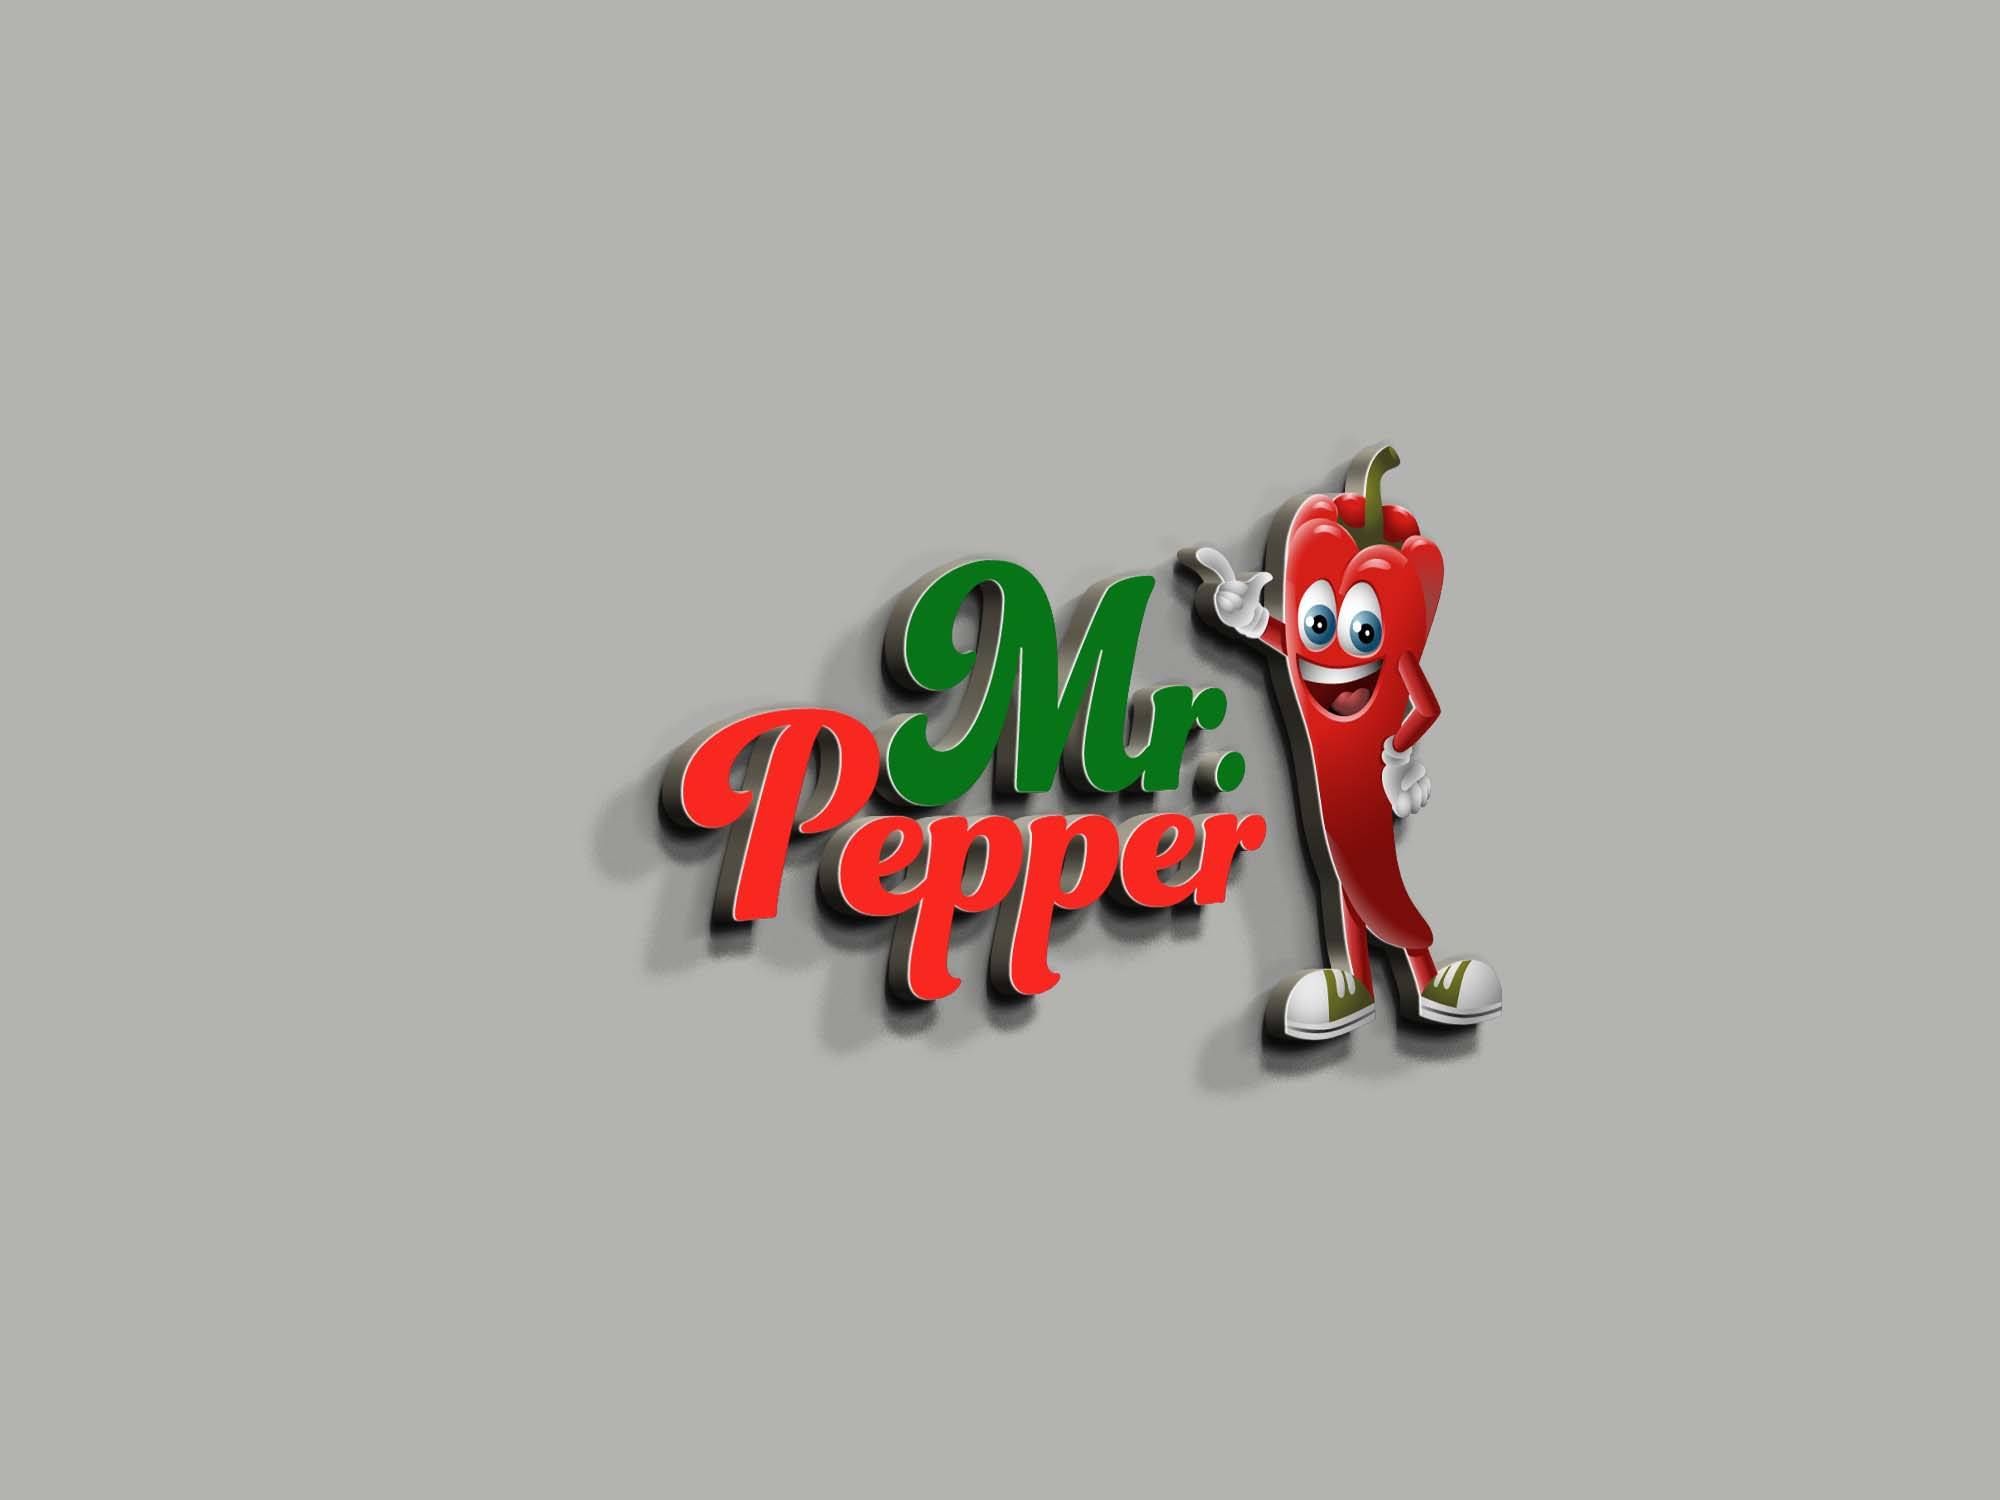 Mr pepper. Мистер Пеппер. Мистер Пеппер картинки. Мини логотип Мистер Пеппер. Mr Pepper салон красоты.